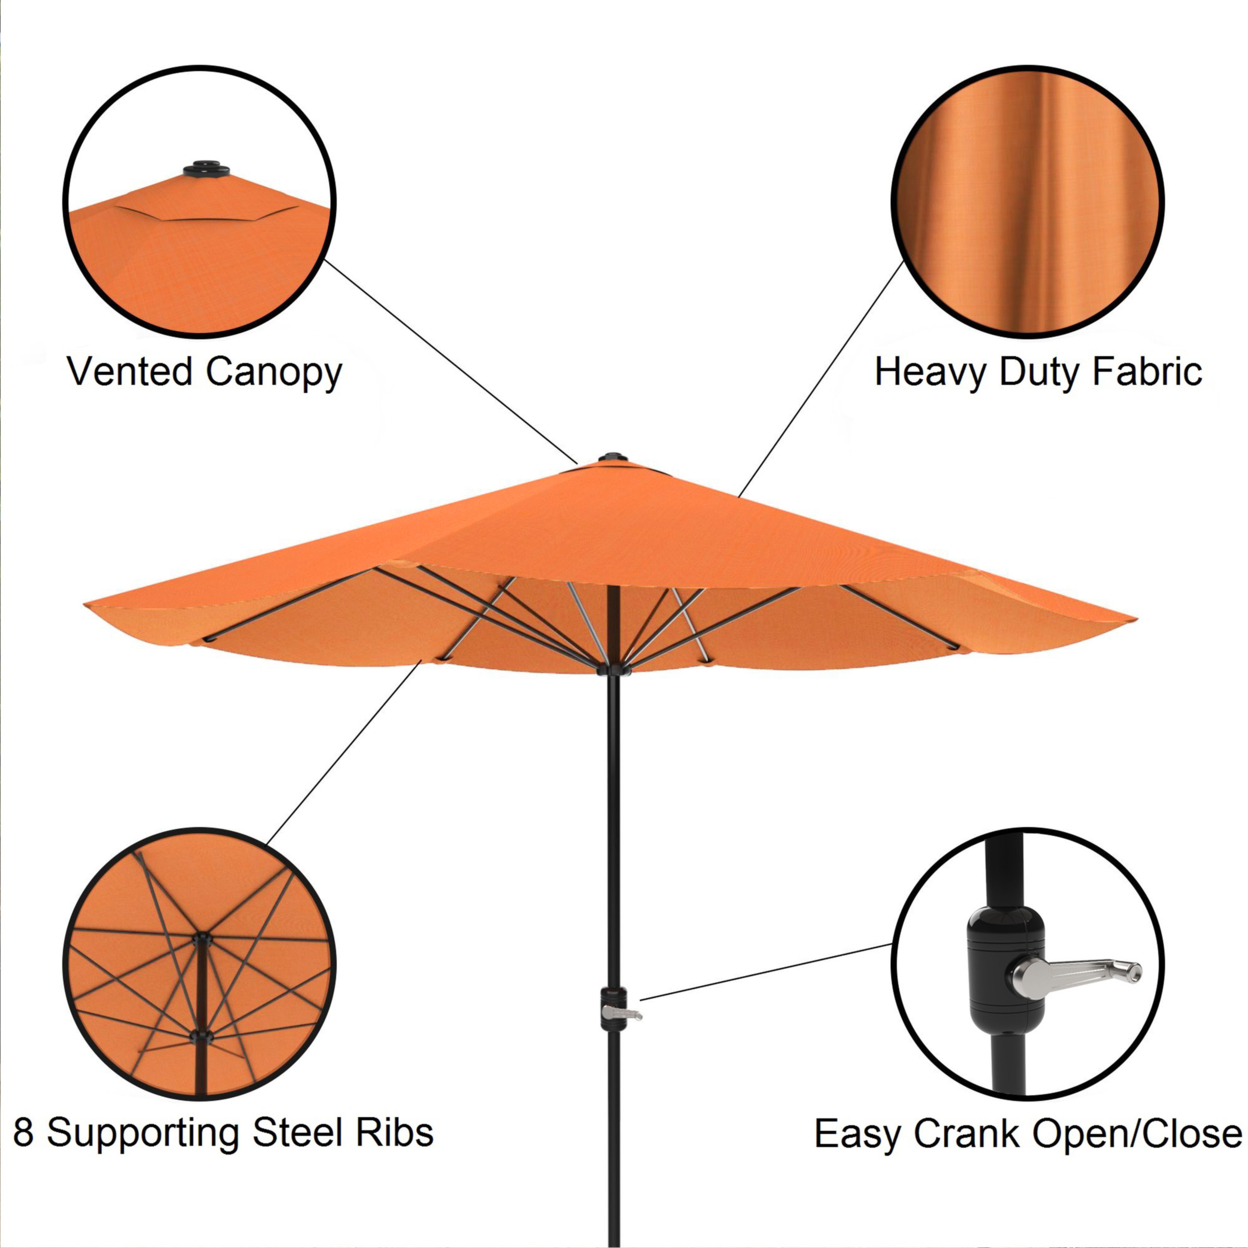 Patio Umbrella Outdoor Shade With Easy Crank- Table Umbrella For Deck, Balcony Terracotta